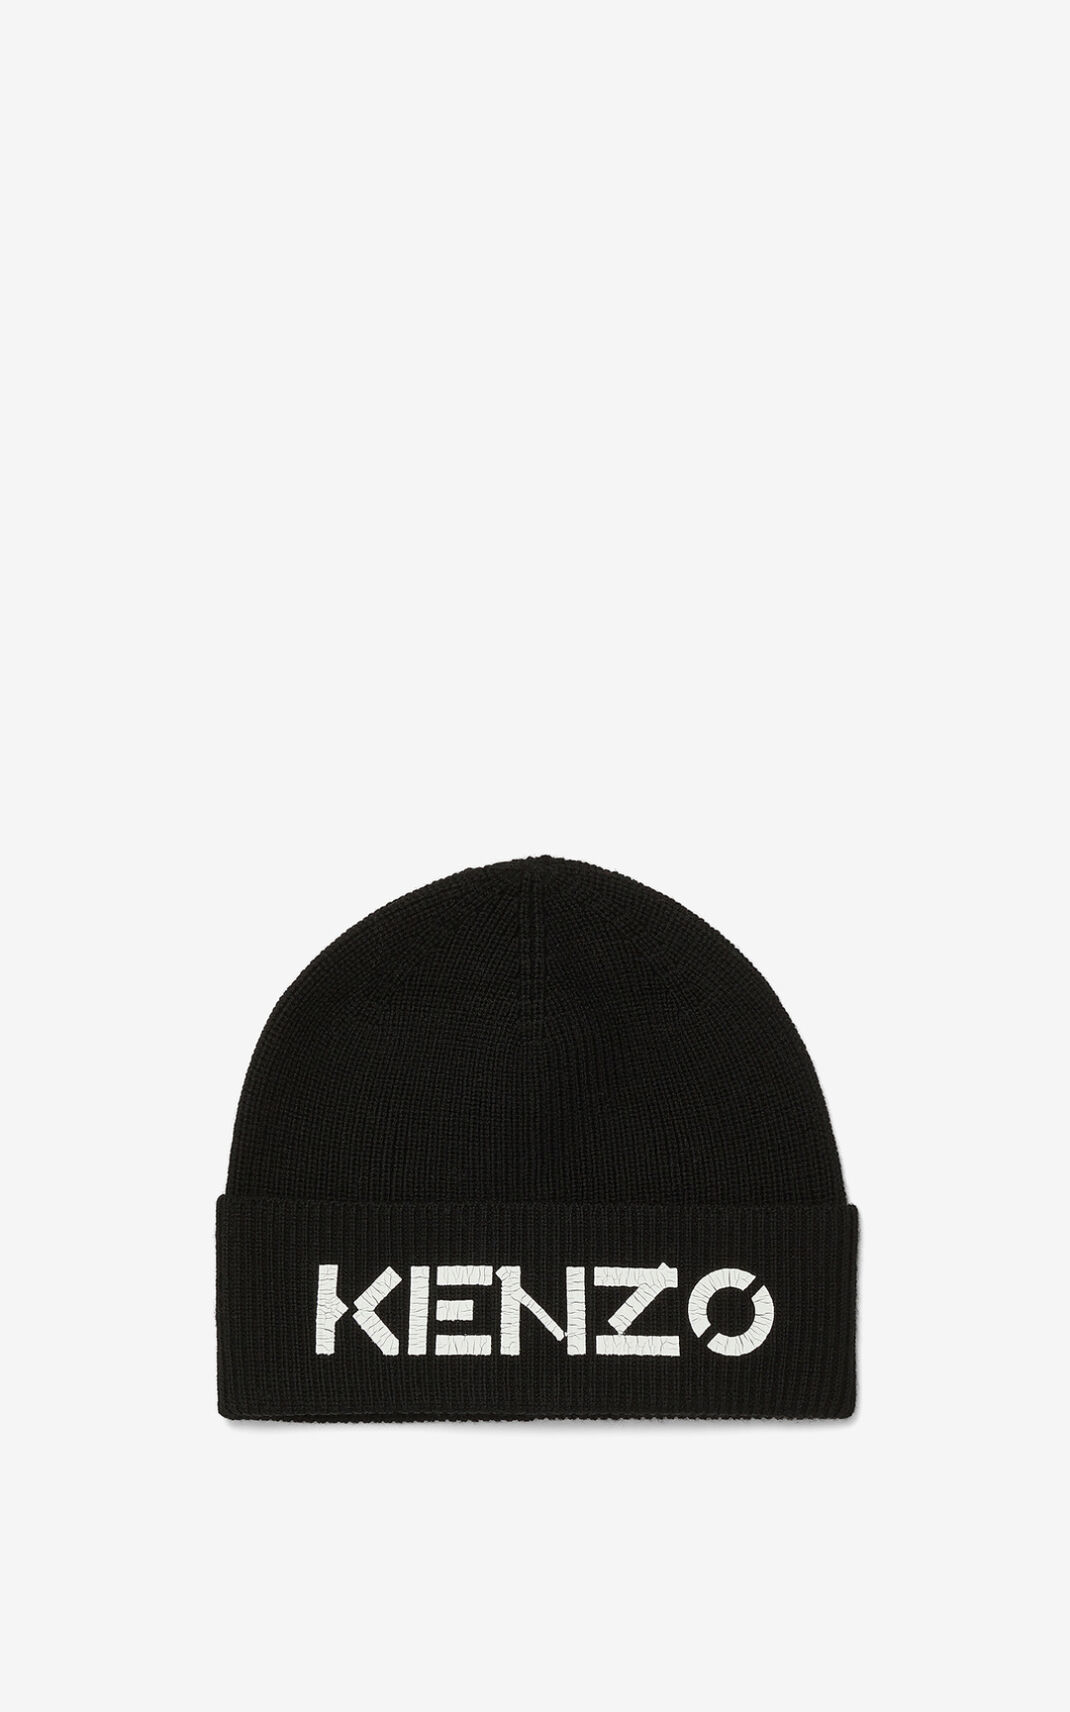 Gorro Kenzo Logo knit Hombre Negras - SKU.7447690